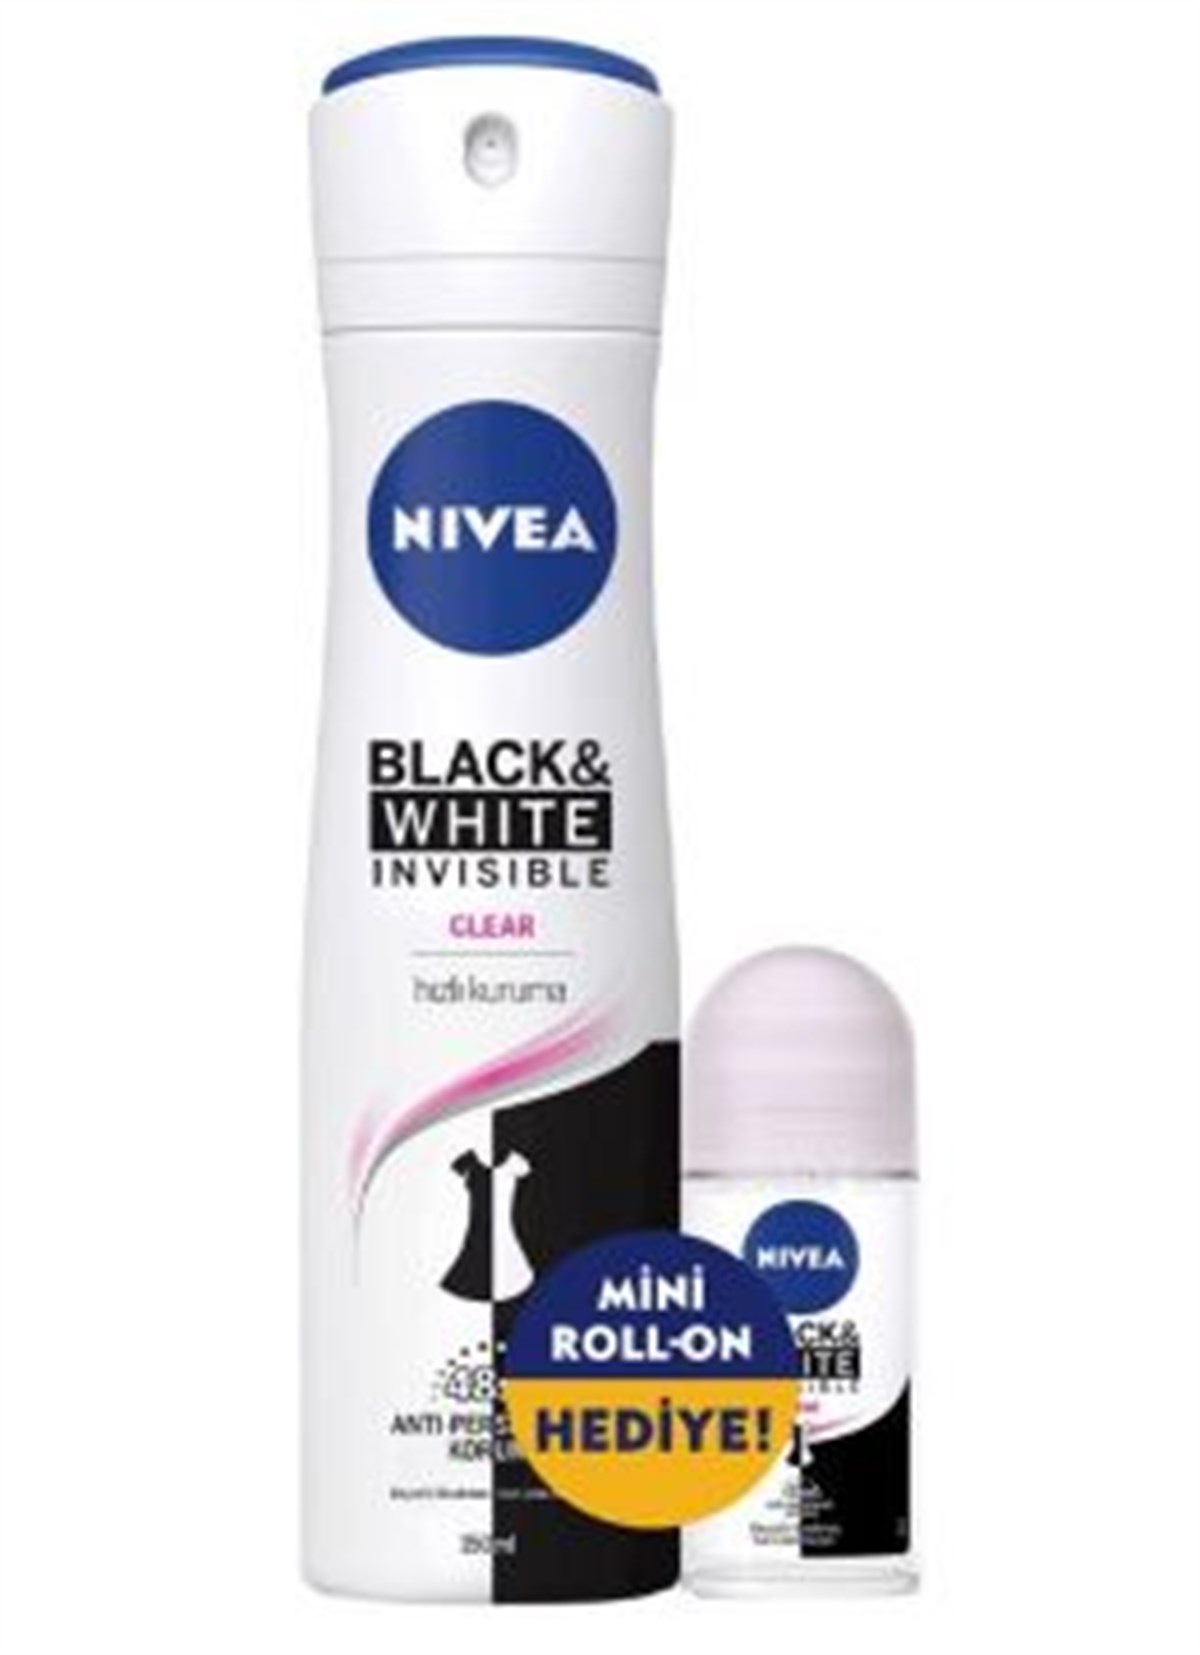 Nivea Invisible Black & White Clear Kadın Deodorant 150 ml + Mini Roll-on  25 ml -LeylekKapıda.com